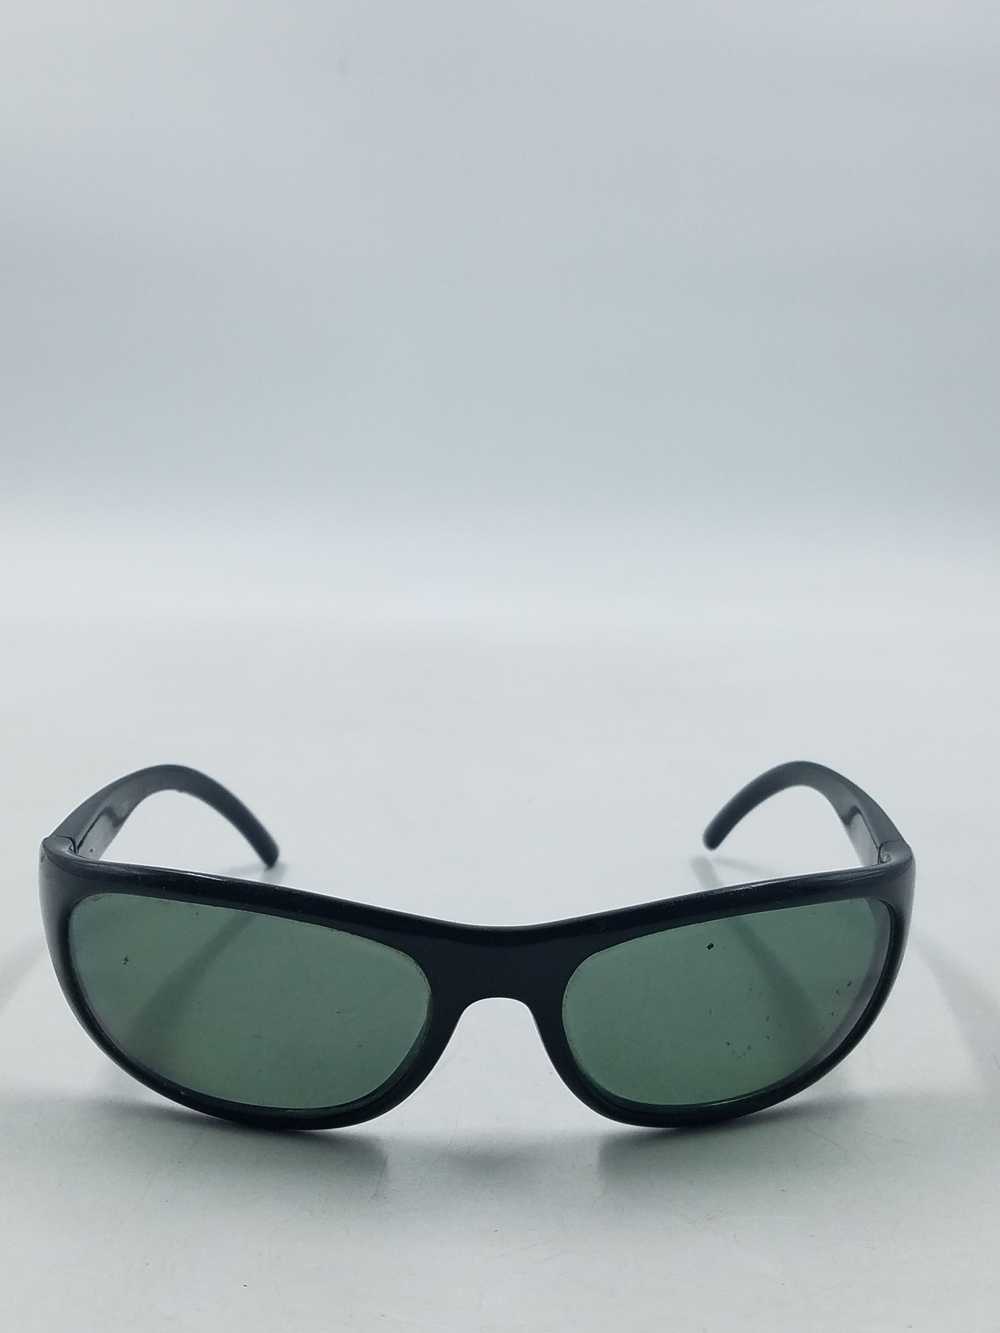 Ray-Ban Black Sport Sunglasses - image 2